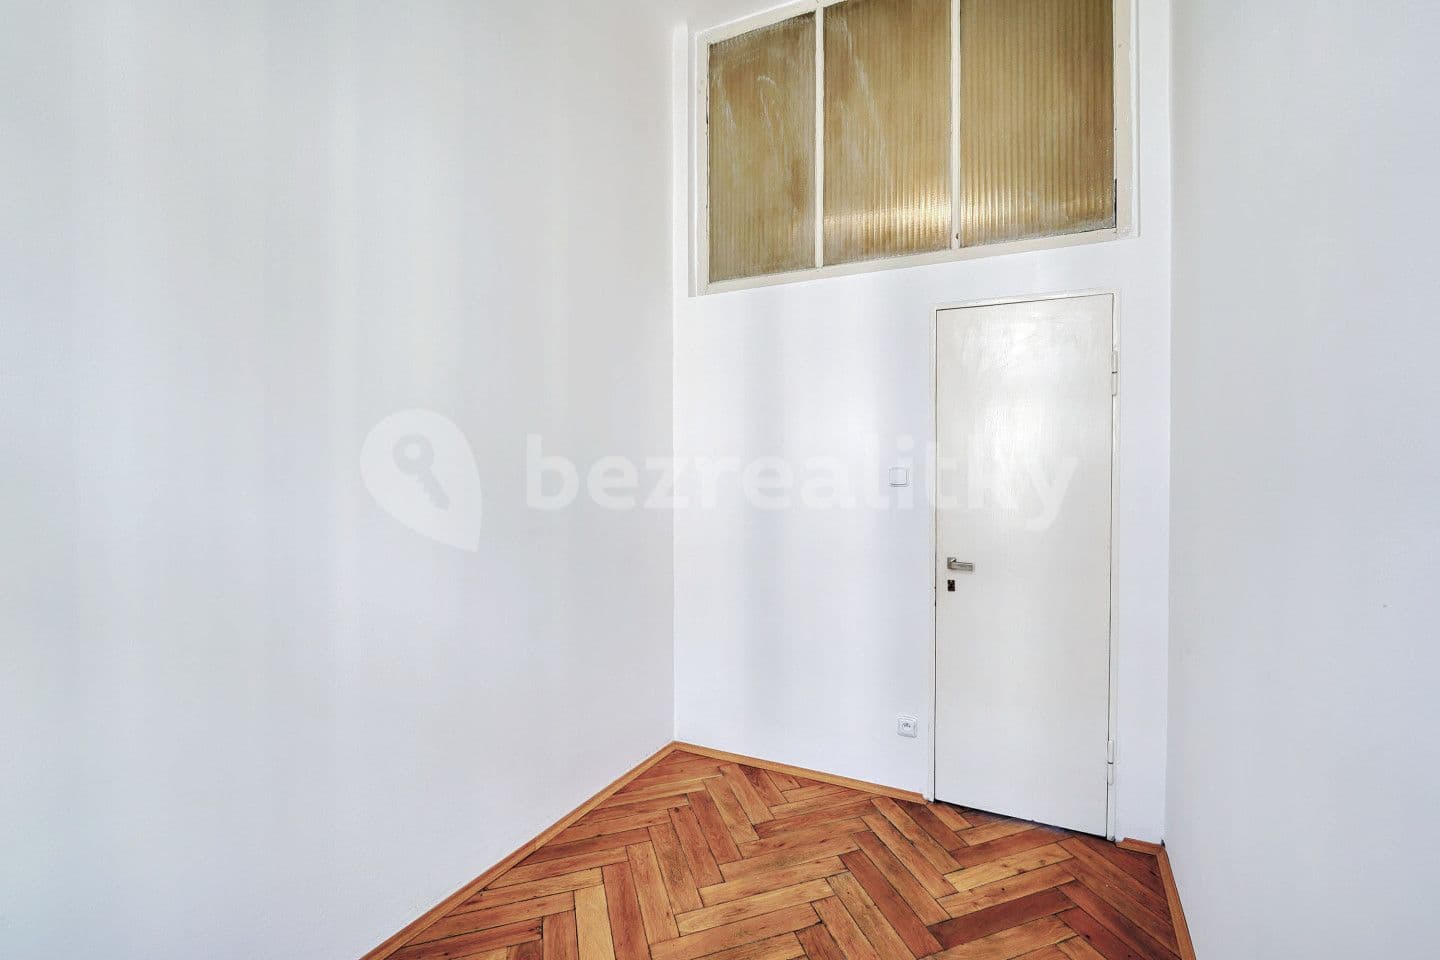 3 bedroom flat for sale, 179 m², Skrétova, Plzeň, Plzeňský Region